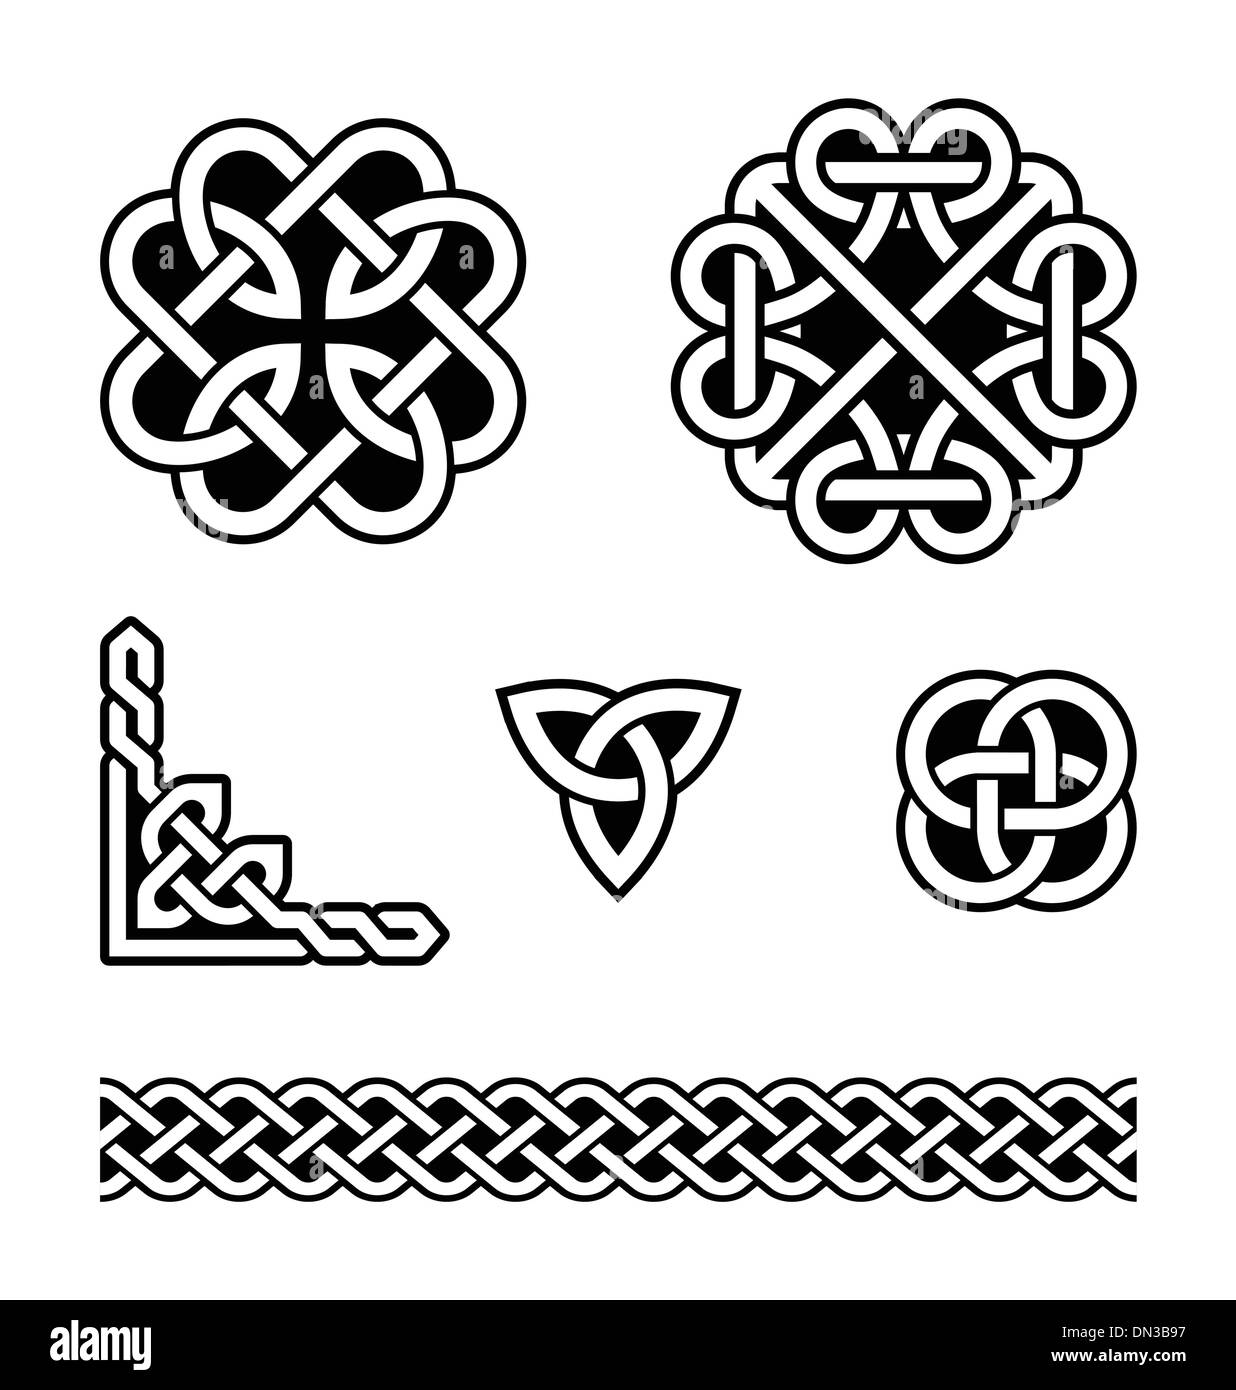 Celtic knots patterns - vector Stock Vector